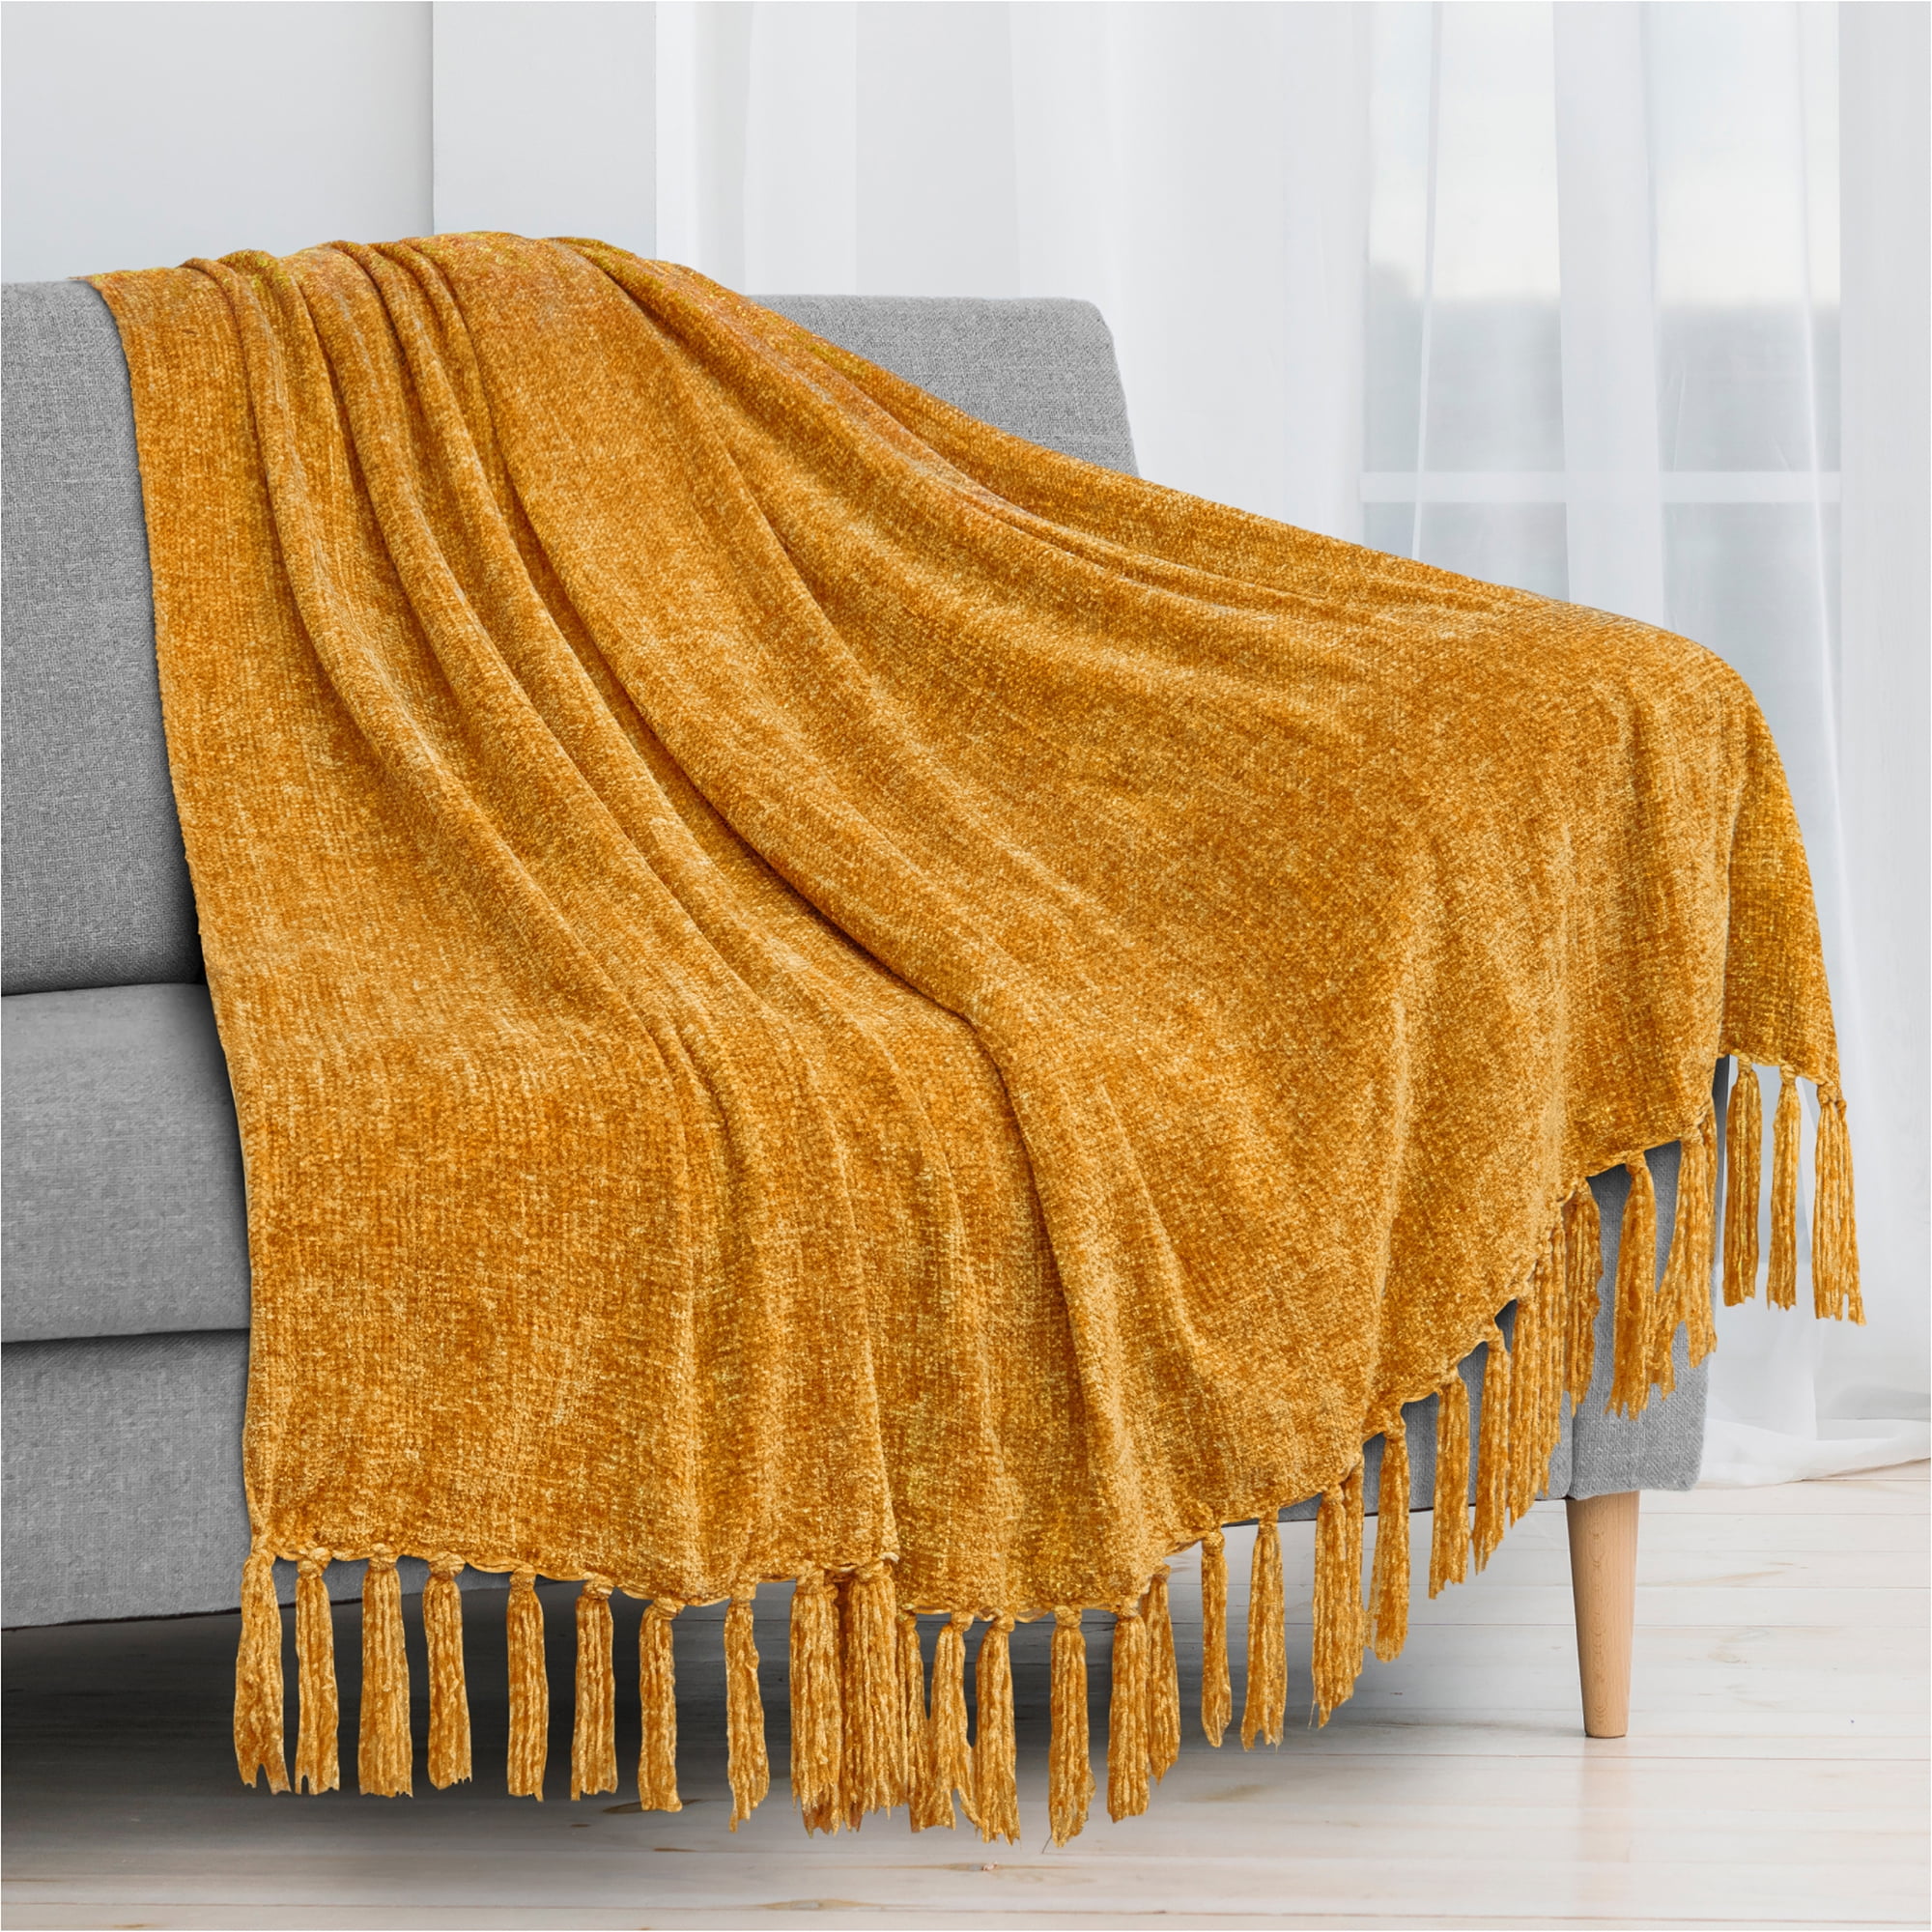 VIKKO Orange Fruit Flowers Throw Blanket 60 x 50 Inch Travel Office Car Warm Soft Cozy Blanket for Home Couch Sofa Decorative